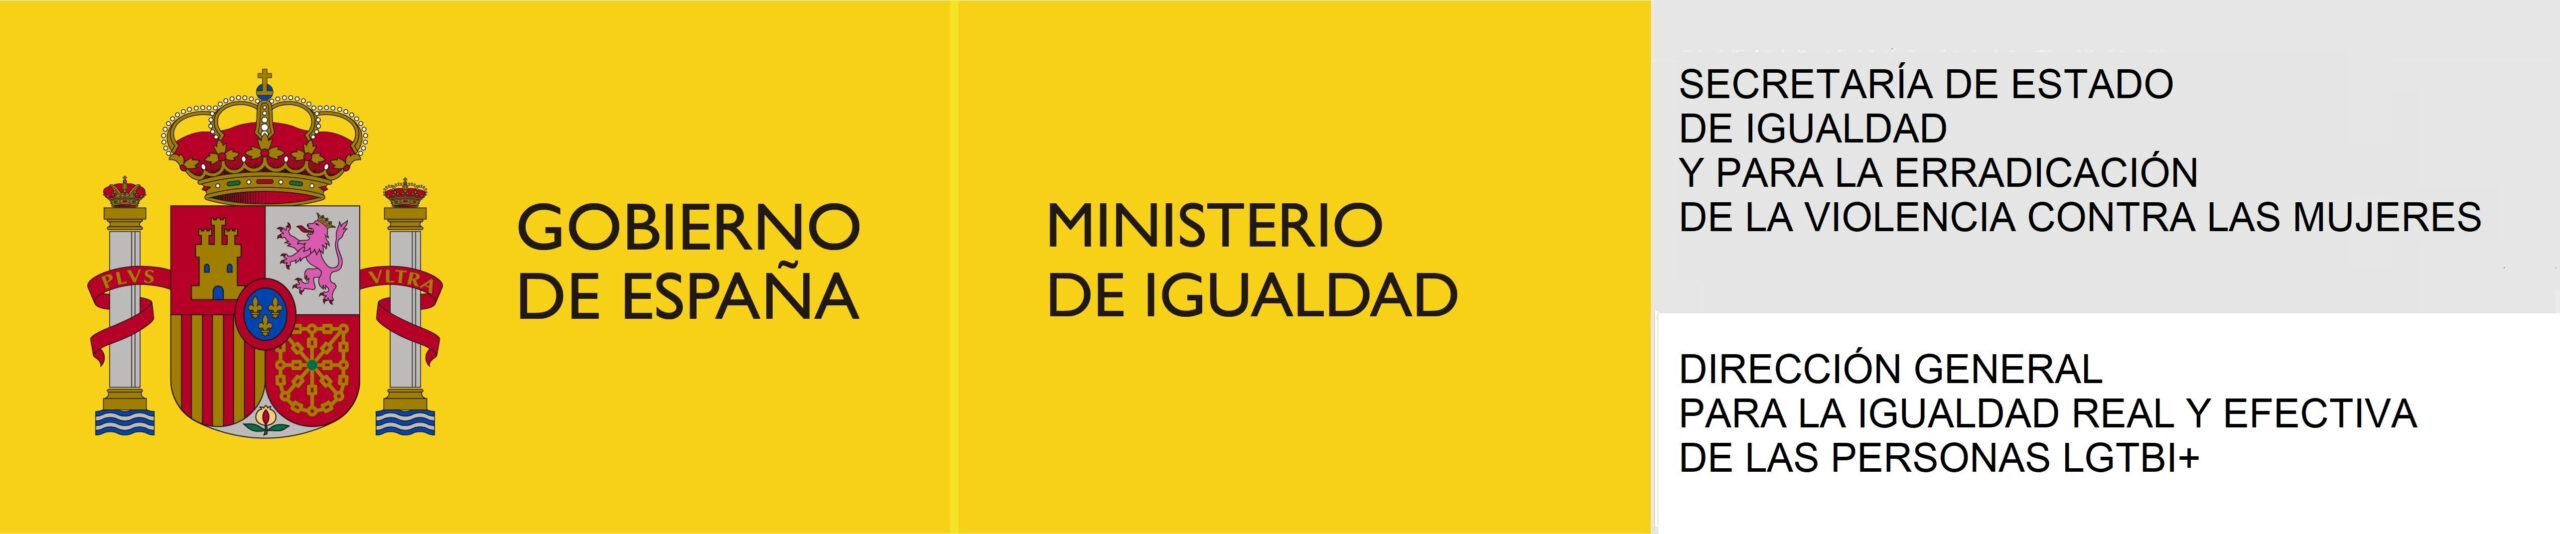 Ministerio de Igualdad scaled